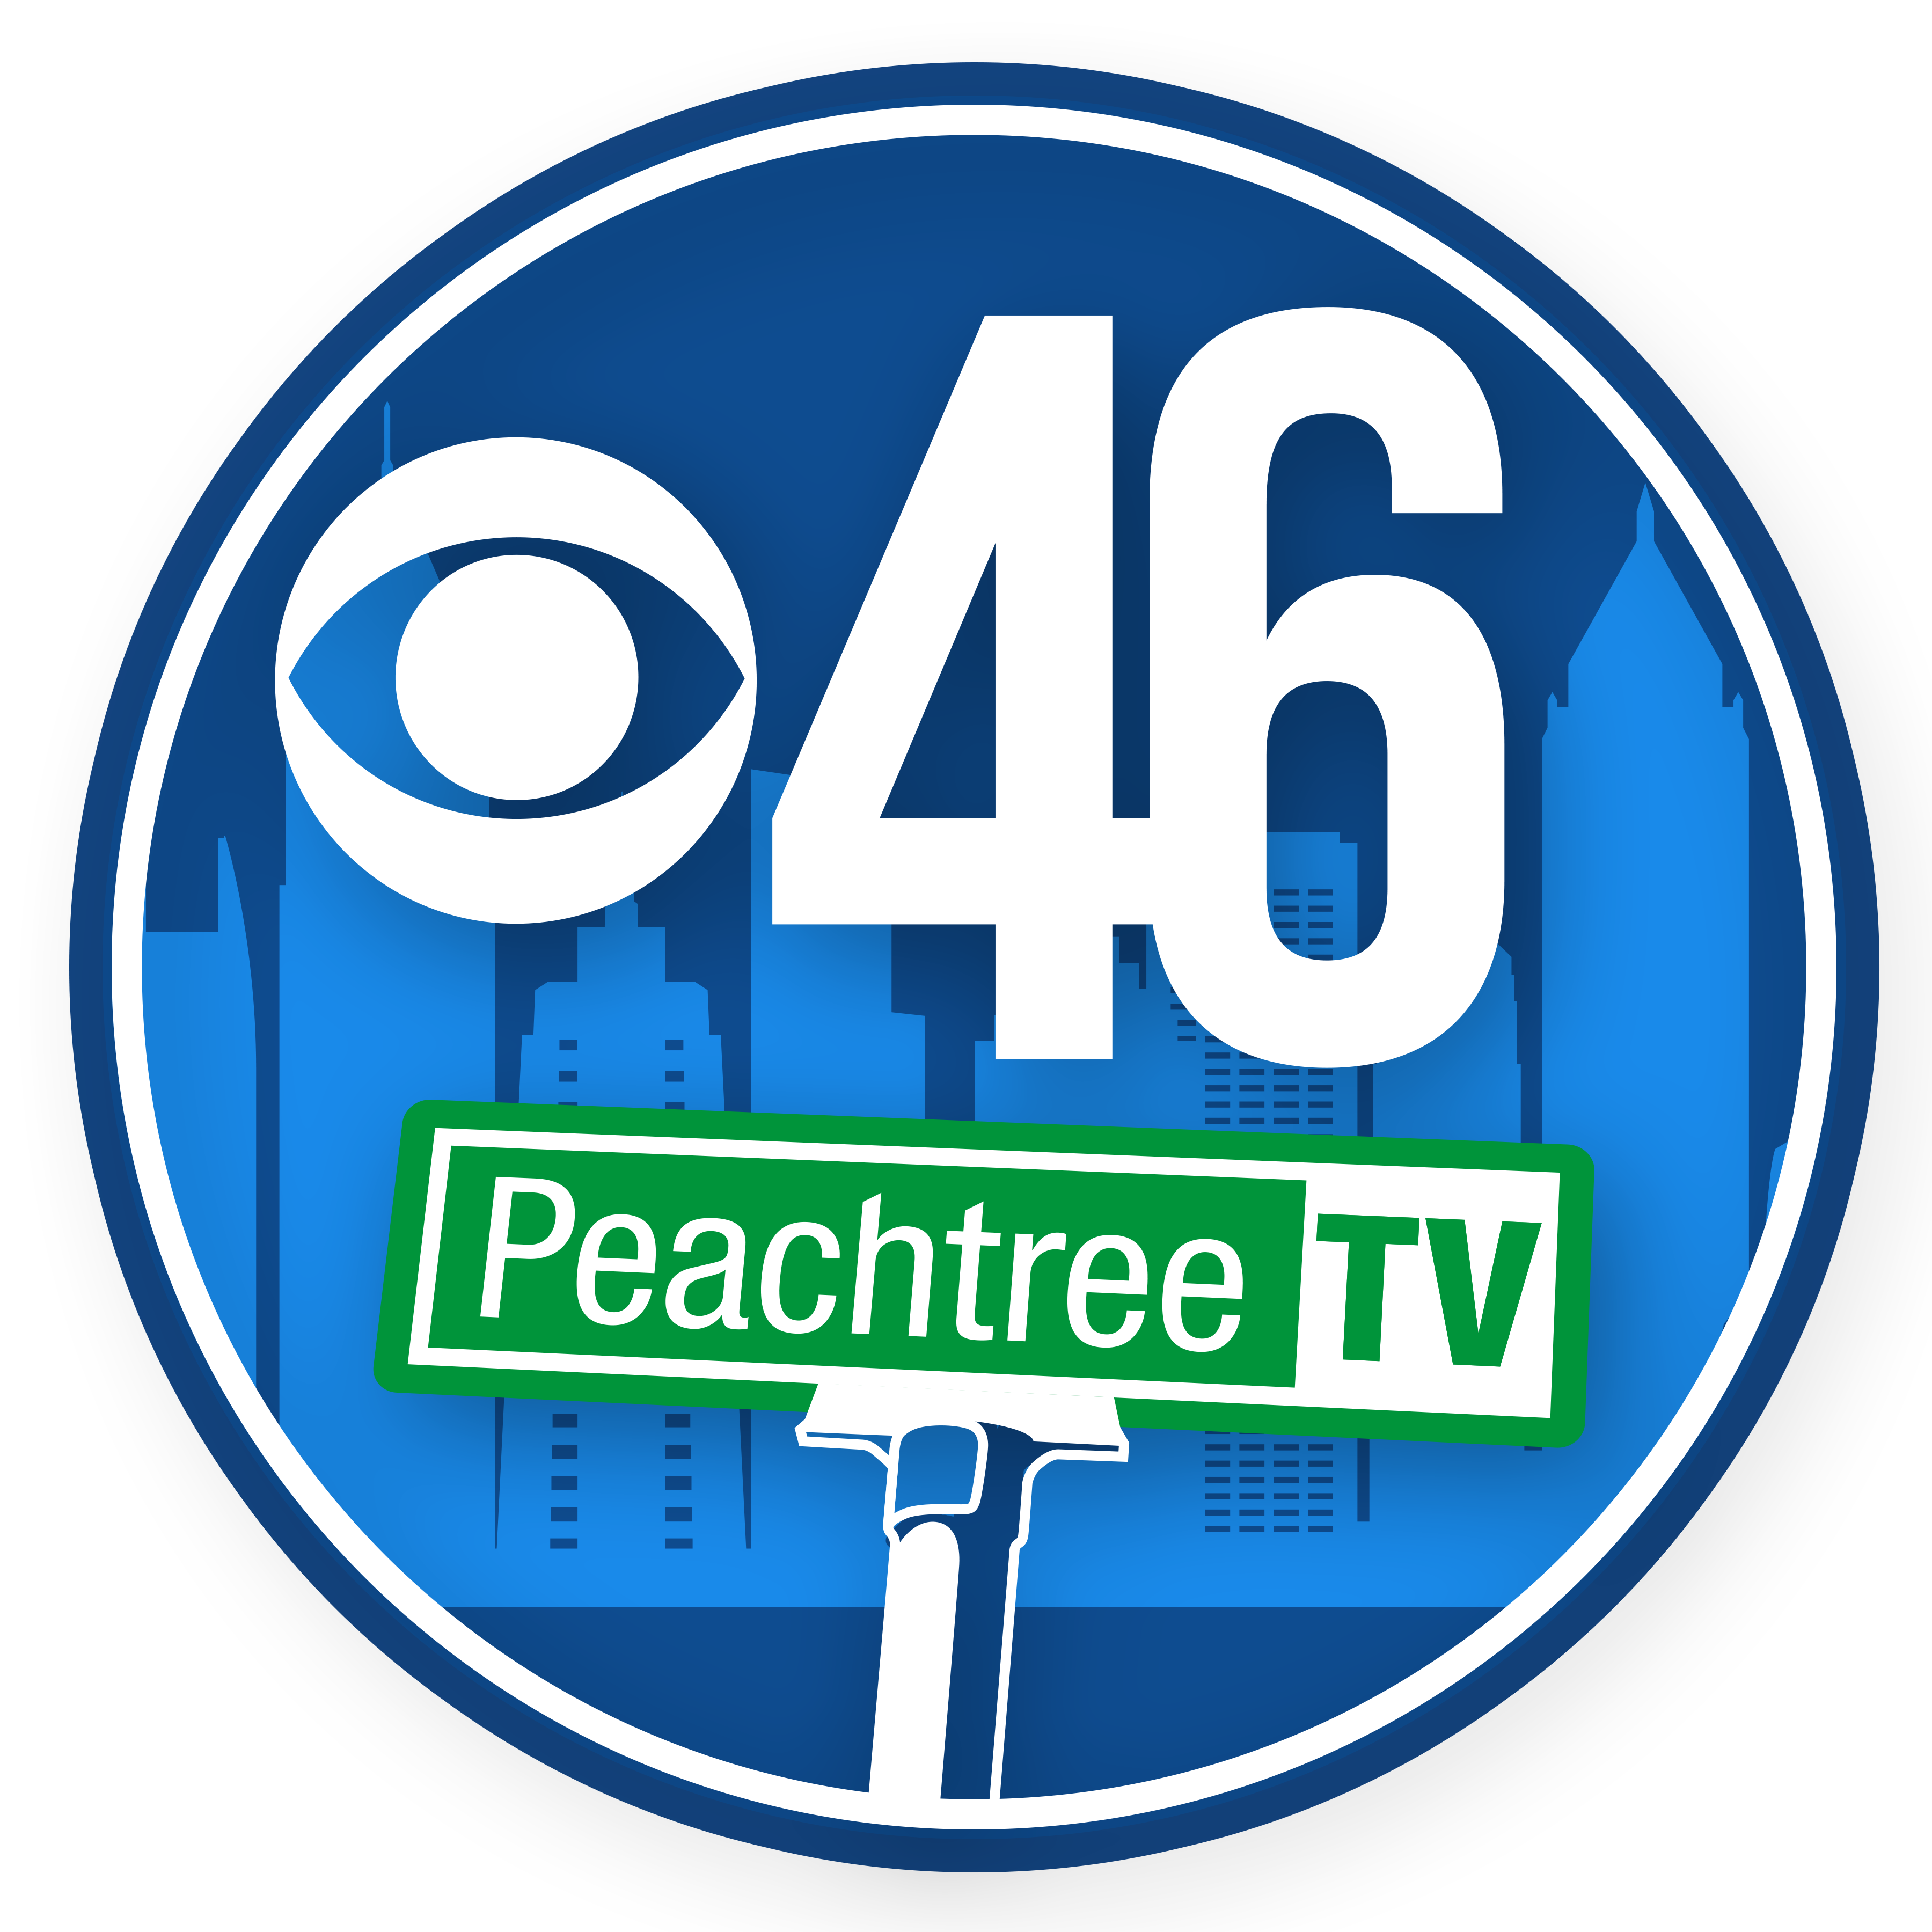 CBS46 Peachtree TV